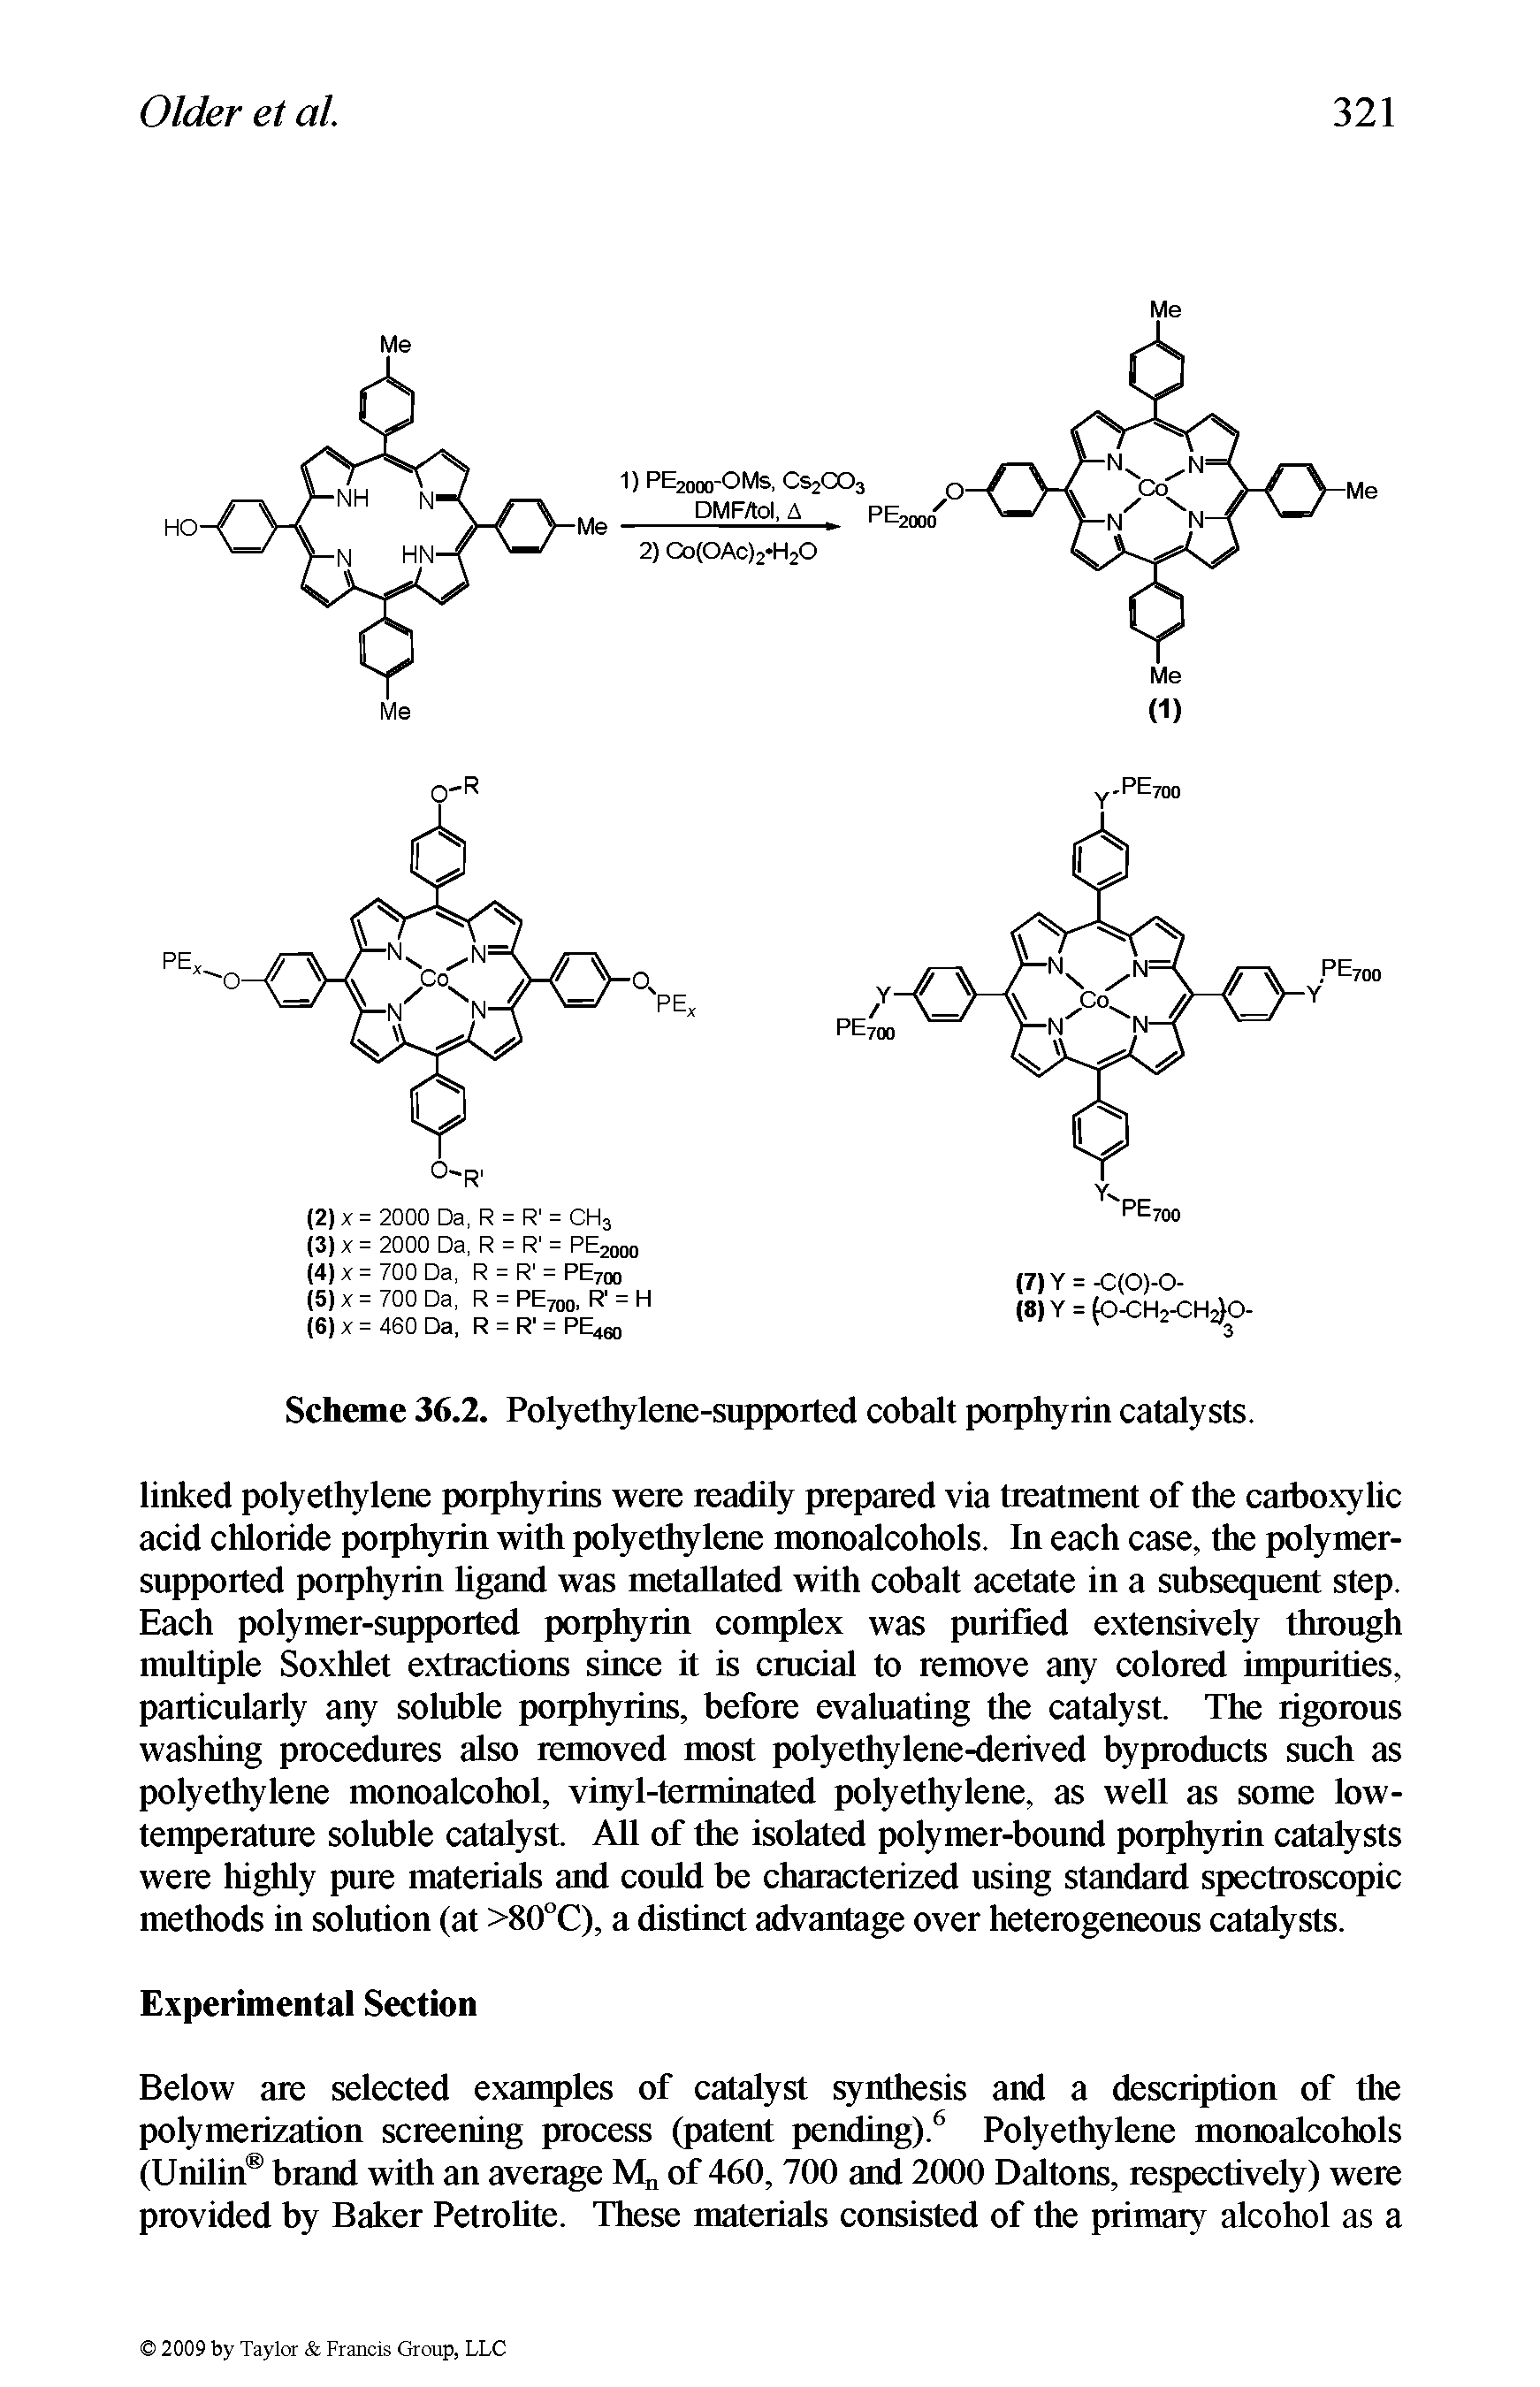 Scheme 36.2. Polyethylene-supported cobalt porphyrin catalysts.